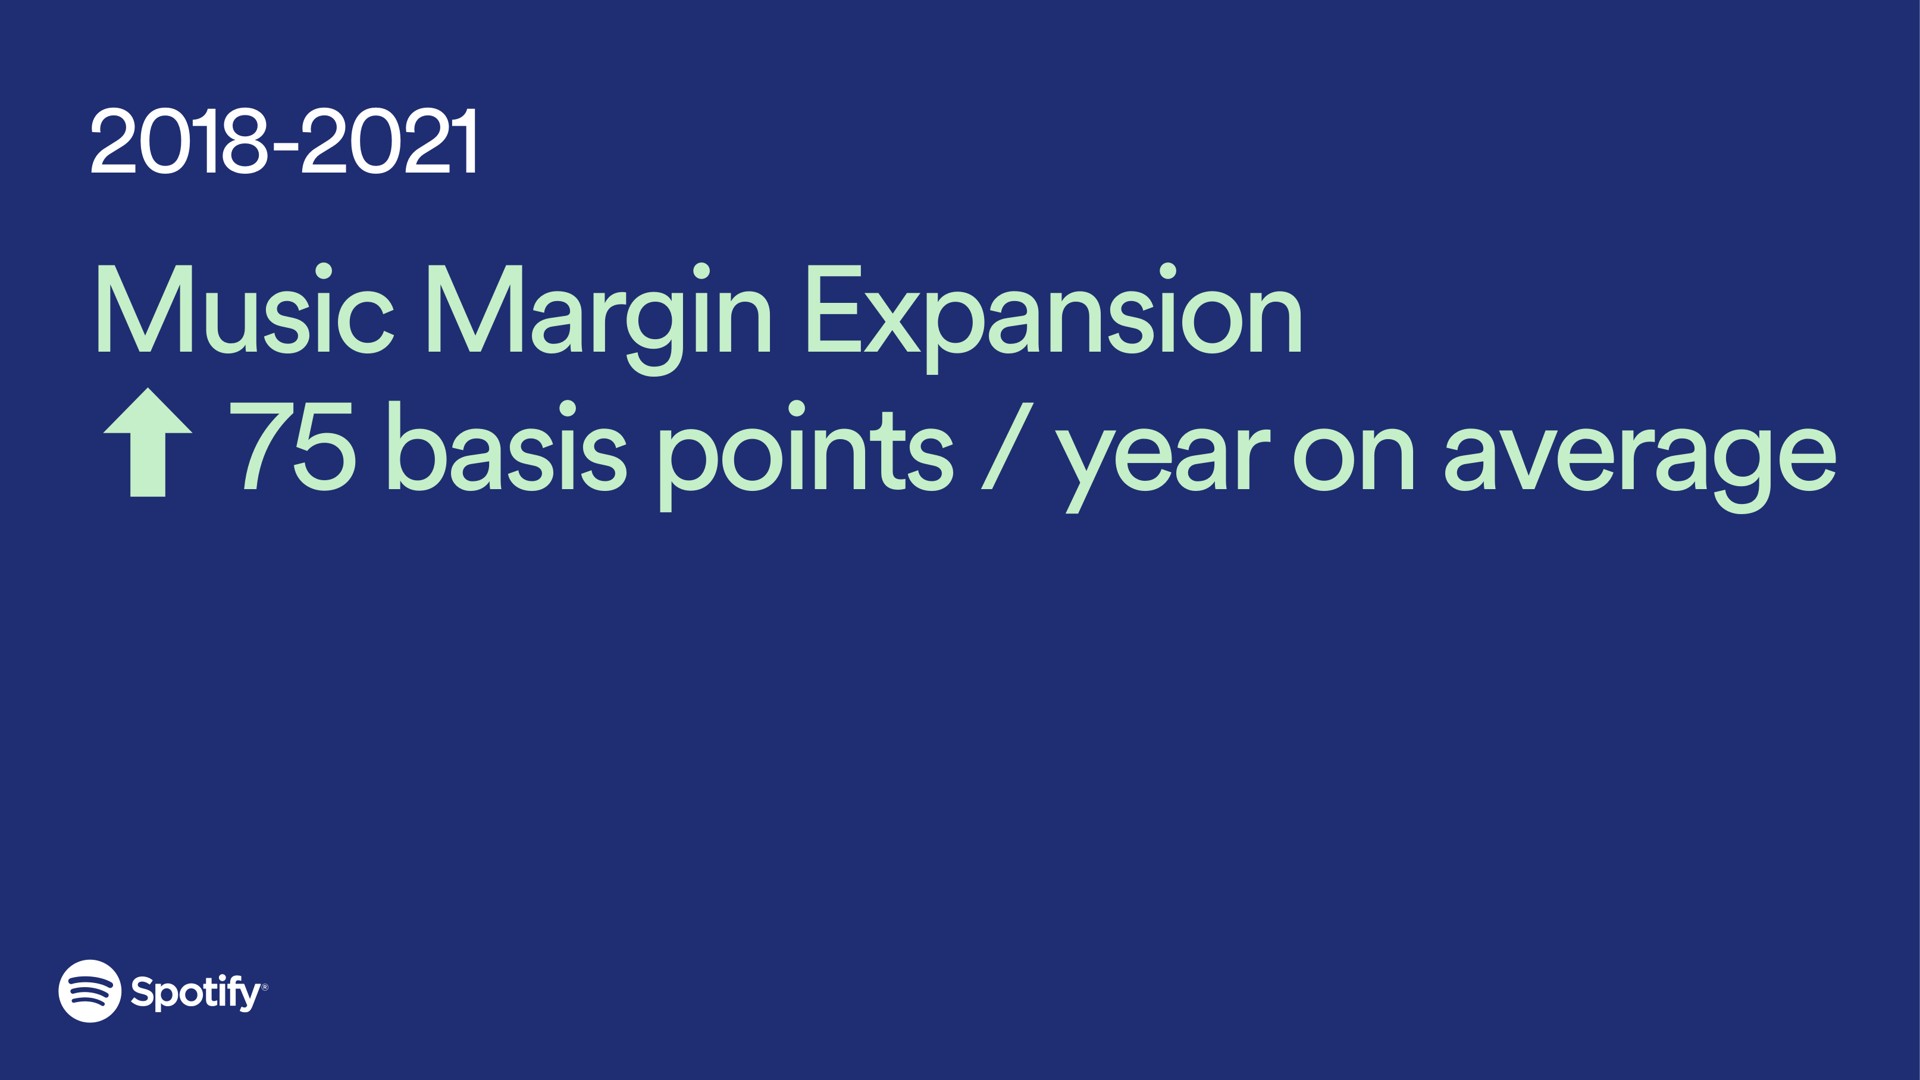 music margin expansion basis points year on average | Spotify